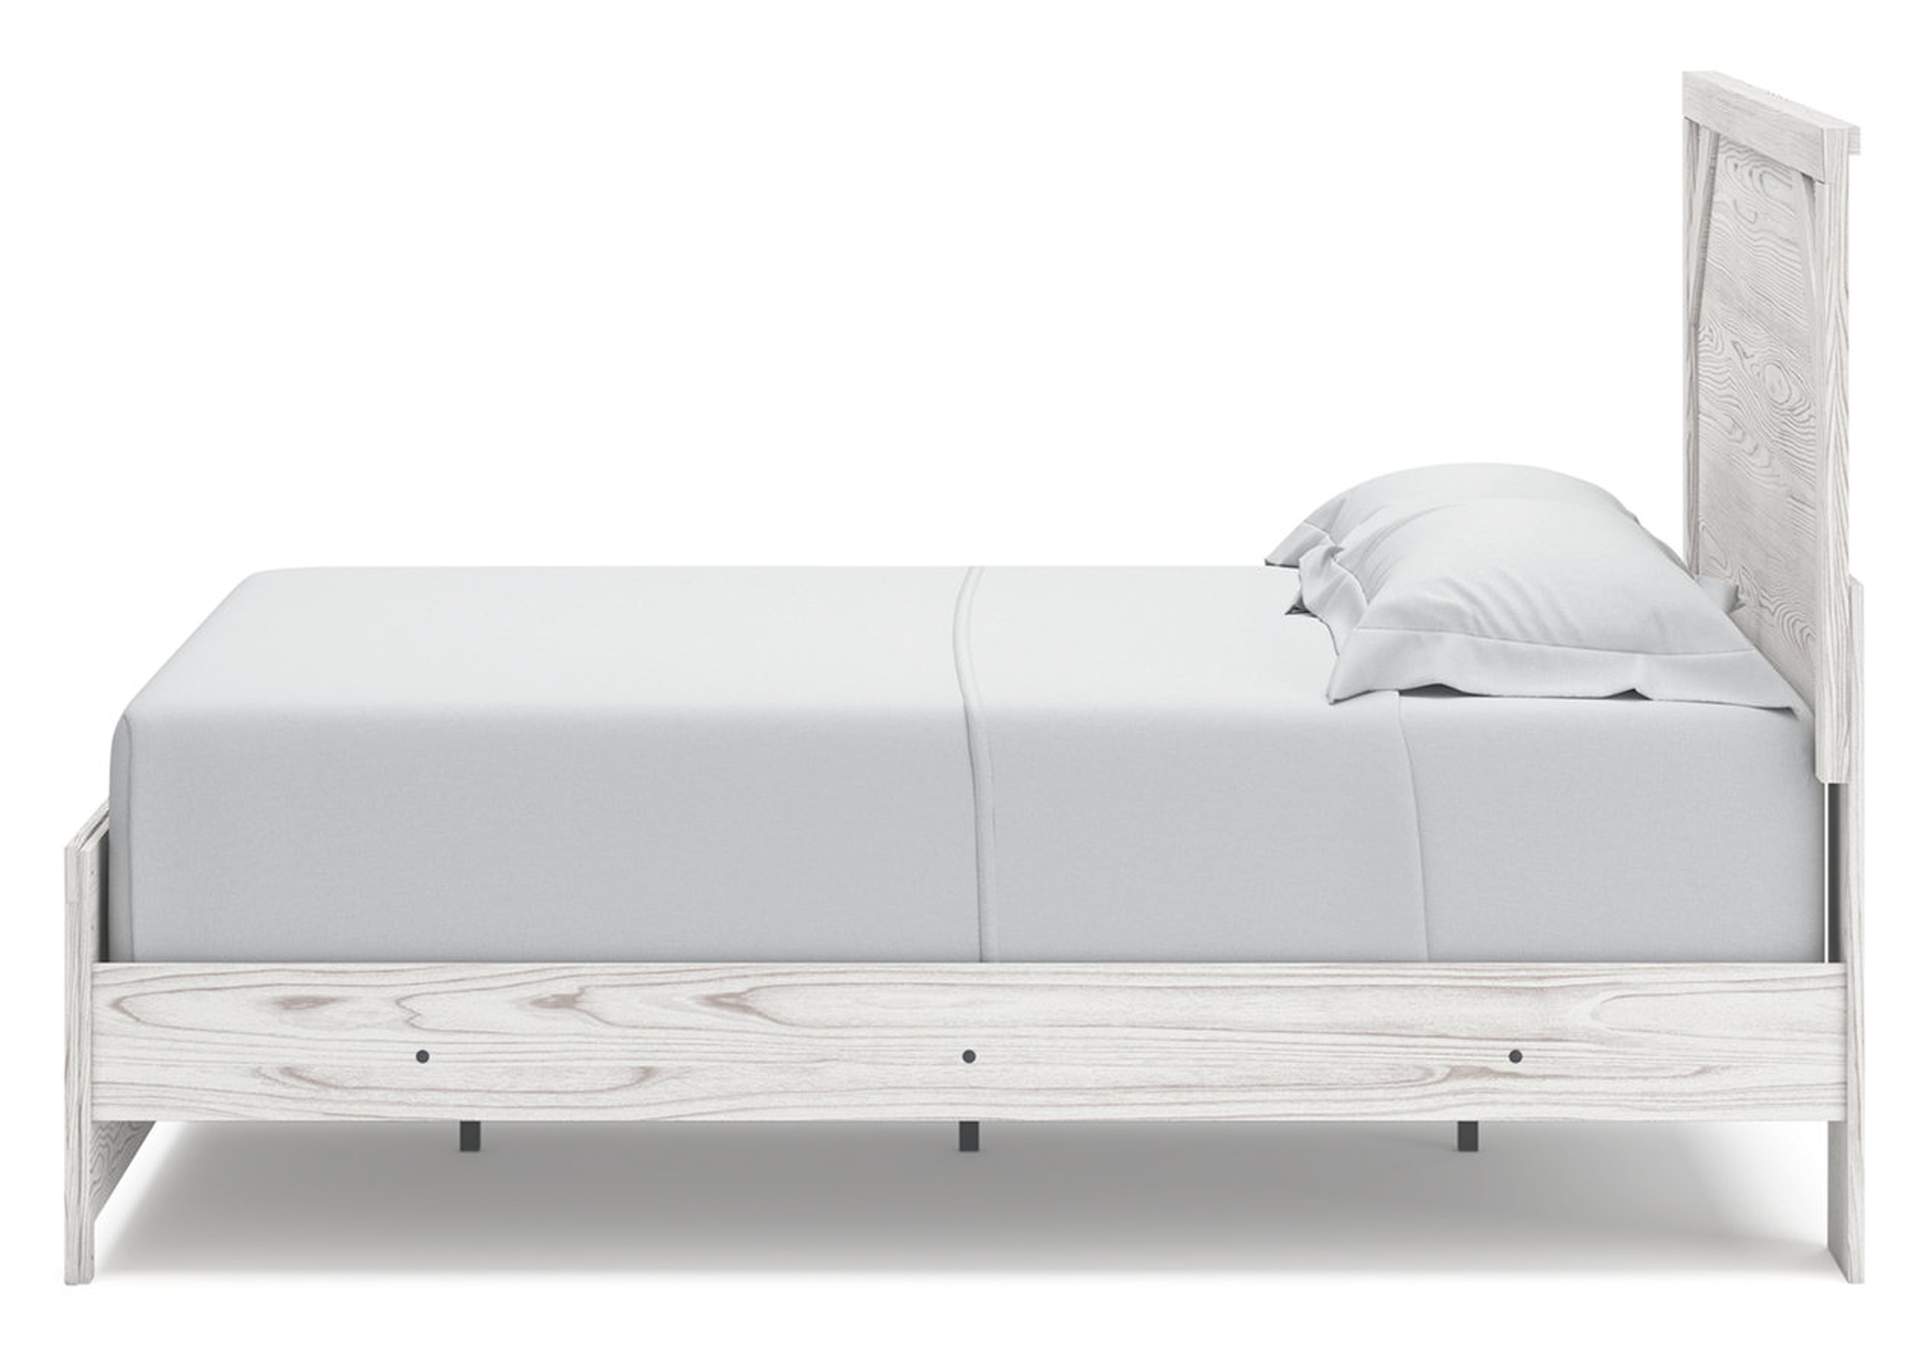 Gerridan Queen Panel Bed, Dresser and Nightstand,Signature Design By Ashley